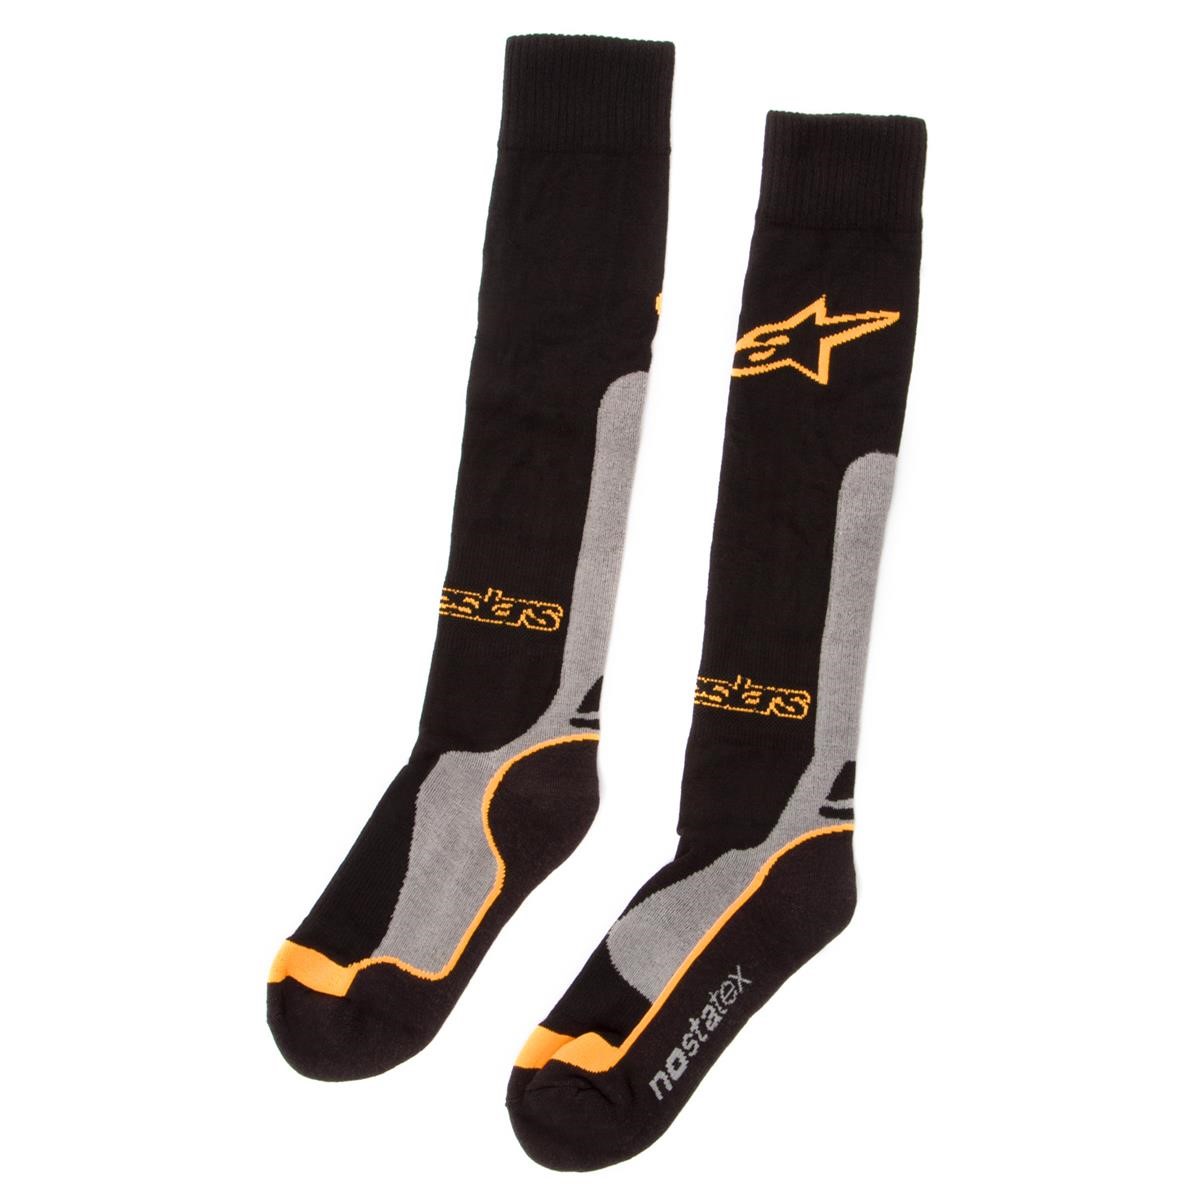 Alpinestars Socks Pro Coolmax Black/Gray/Orange